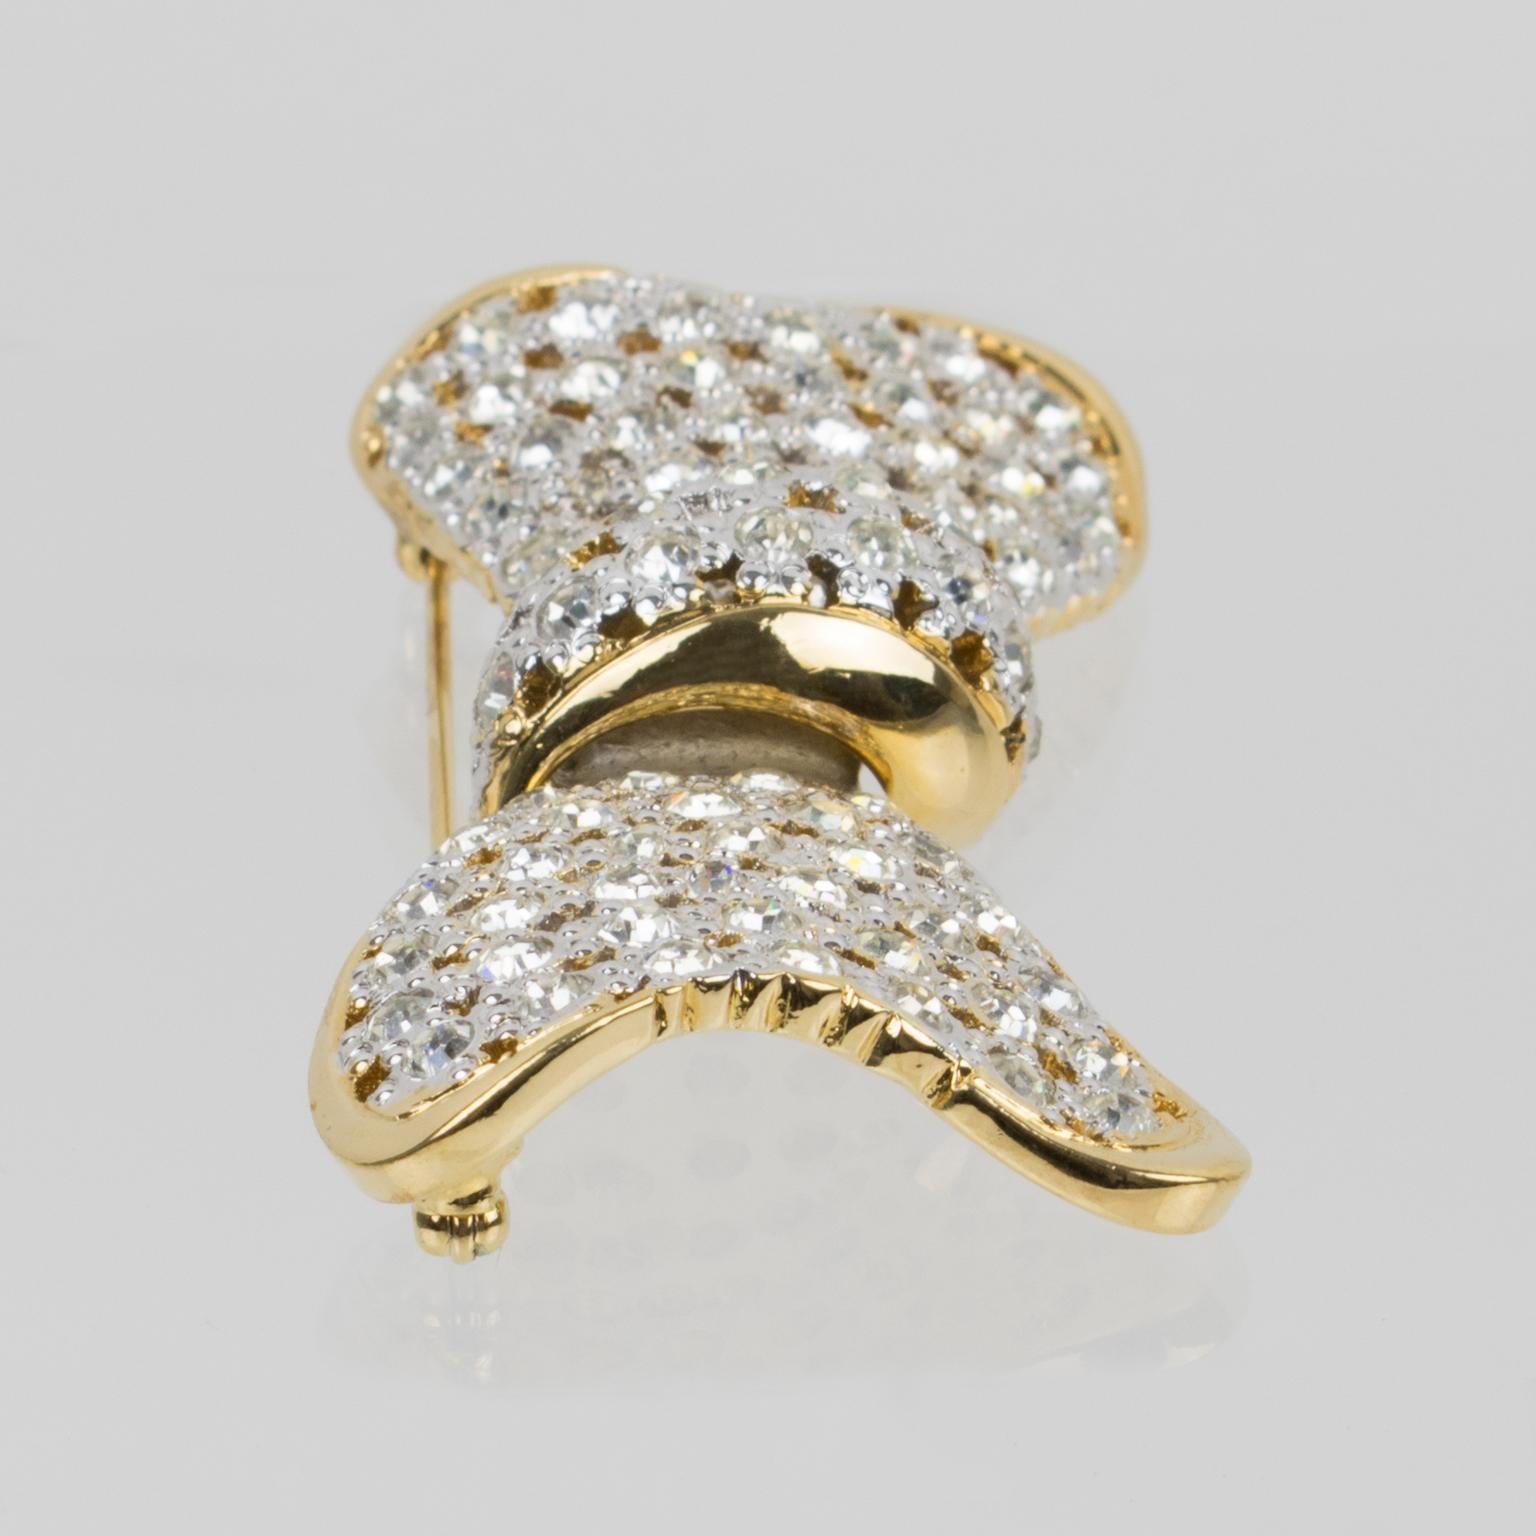 Valentino Garavani Jeweled Bowtie Pin Brooch For Sale 1